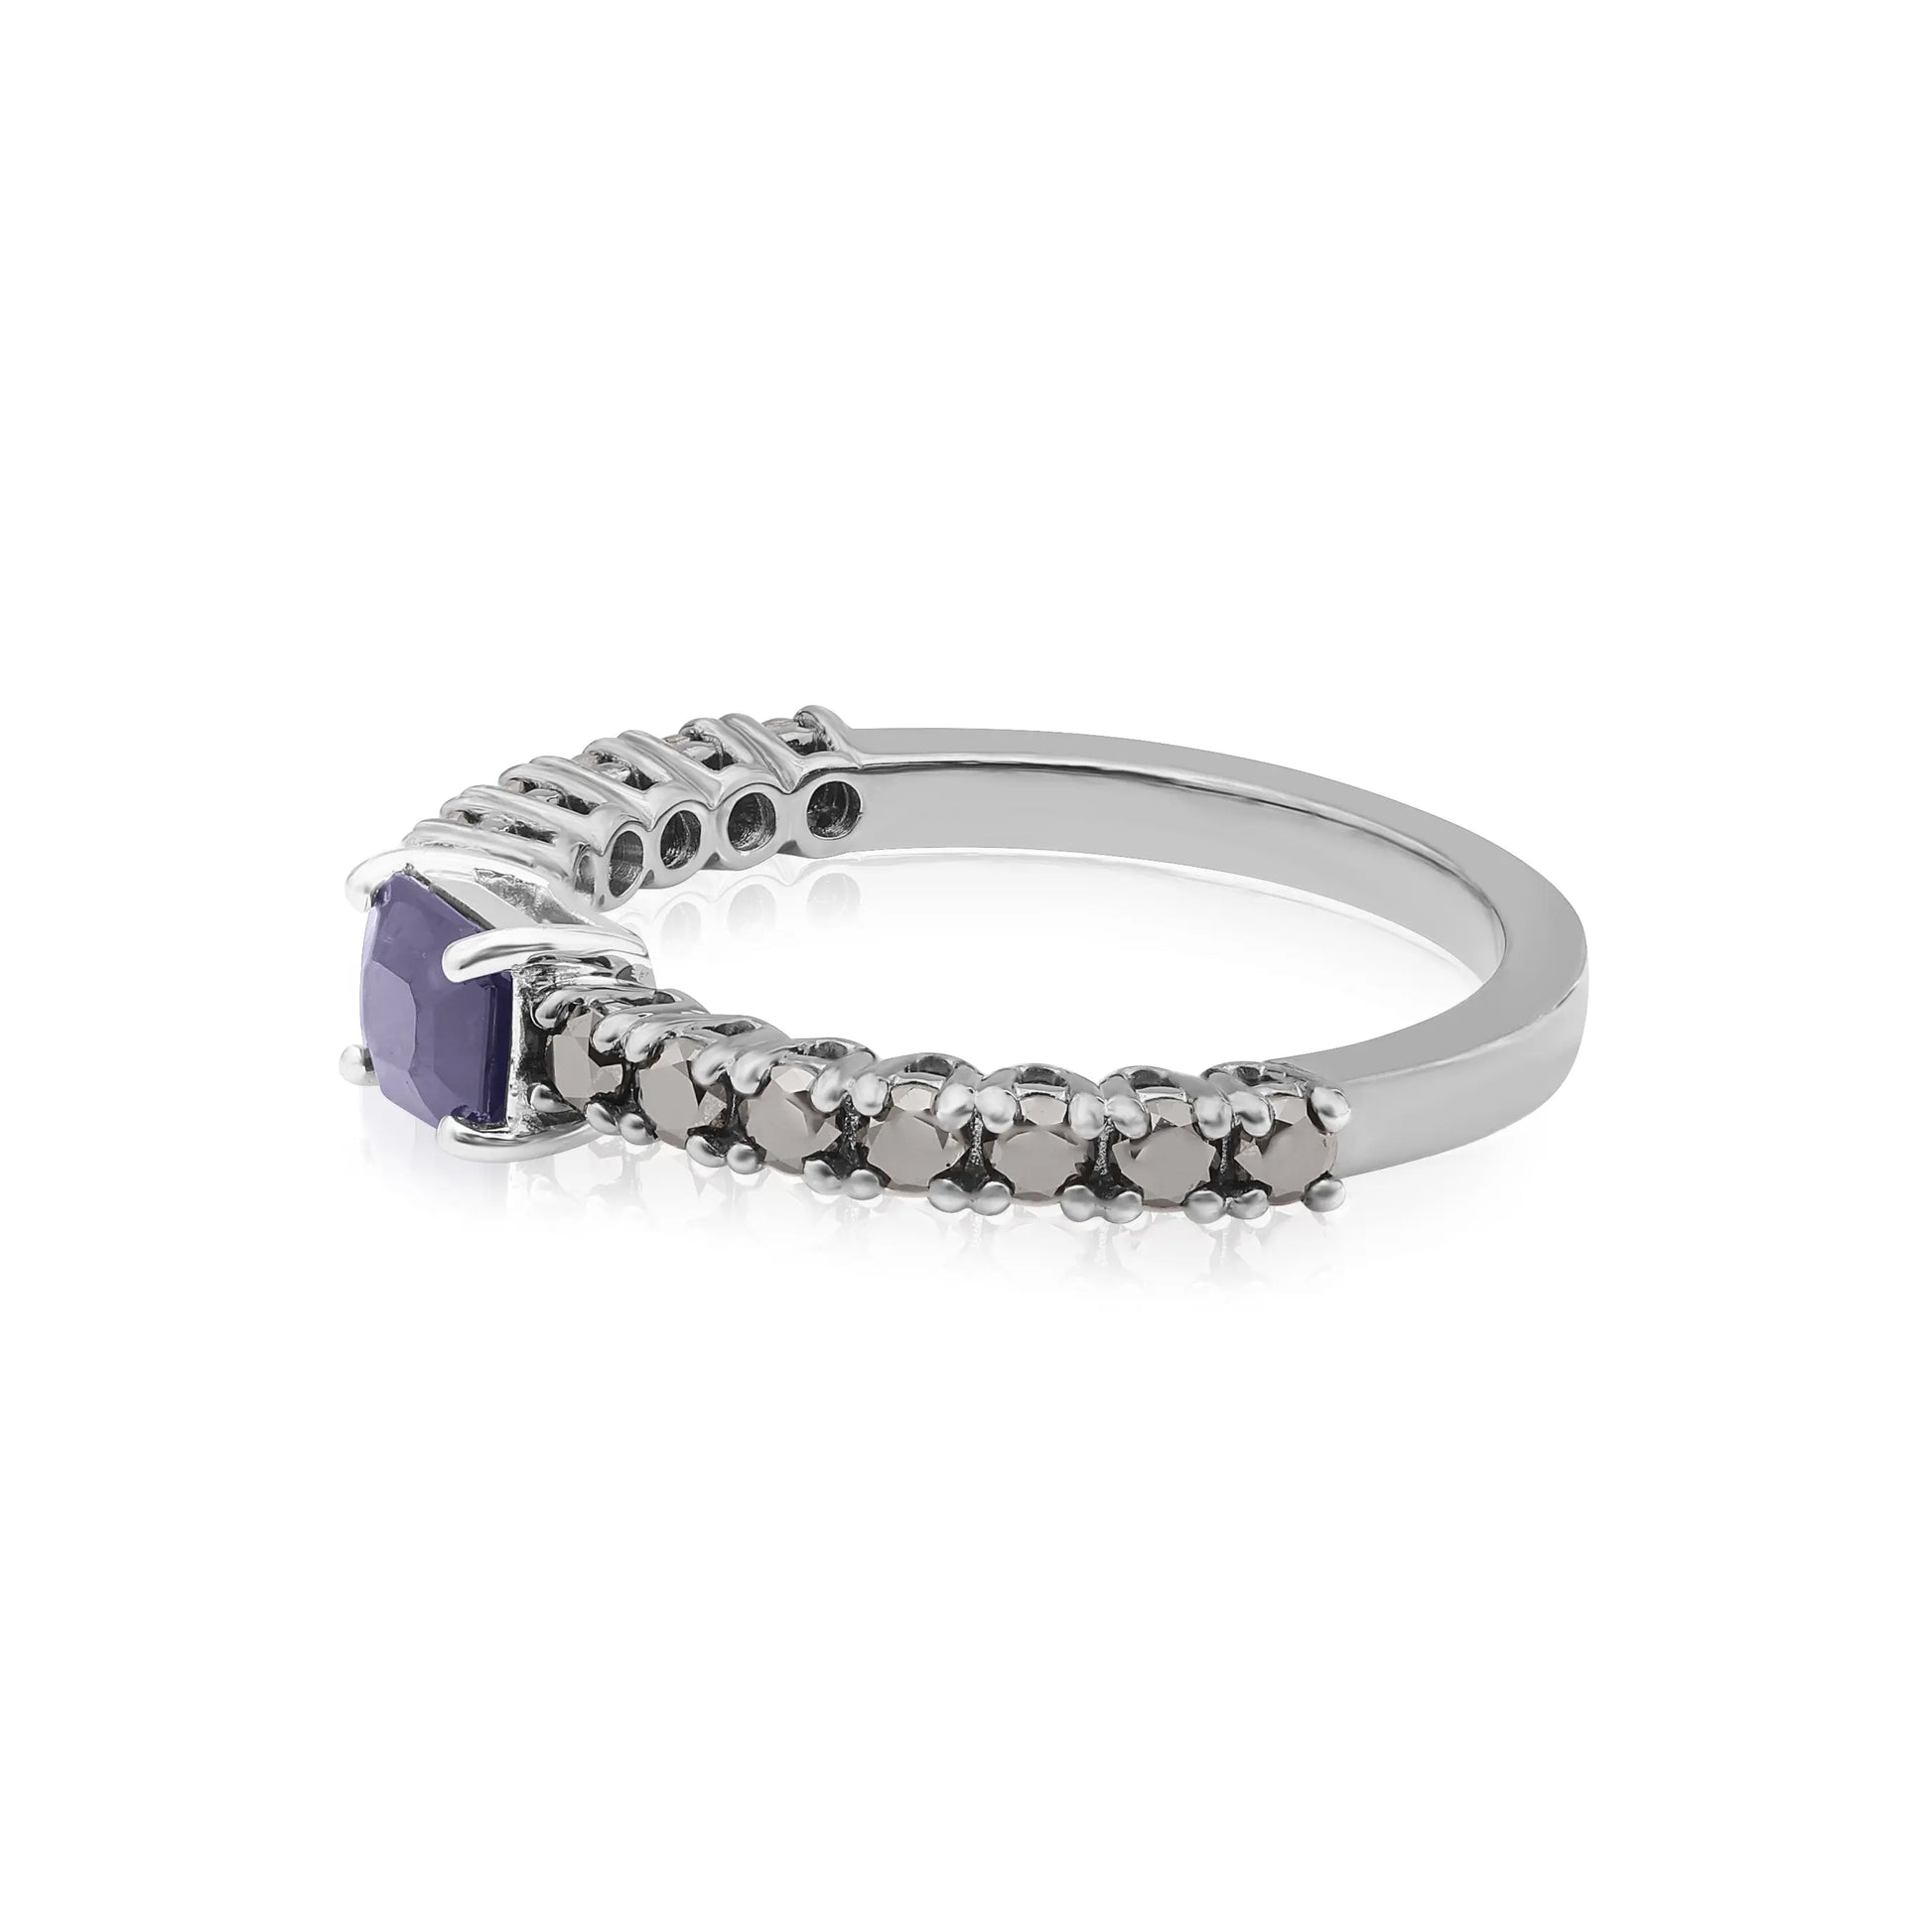 Black Diamond and Sapphire Ring - Danson Jewelers Gemstone Rings 